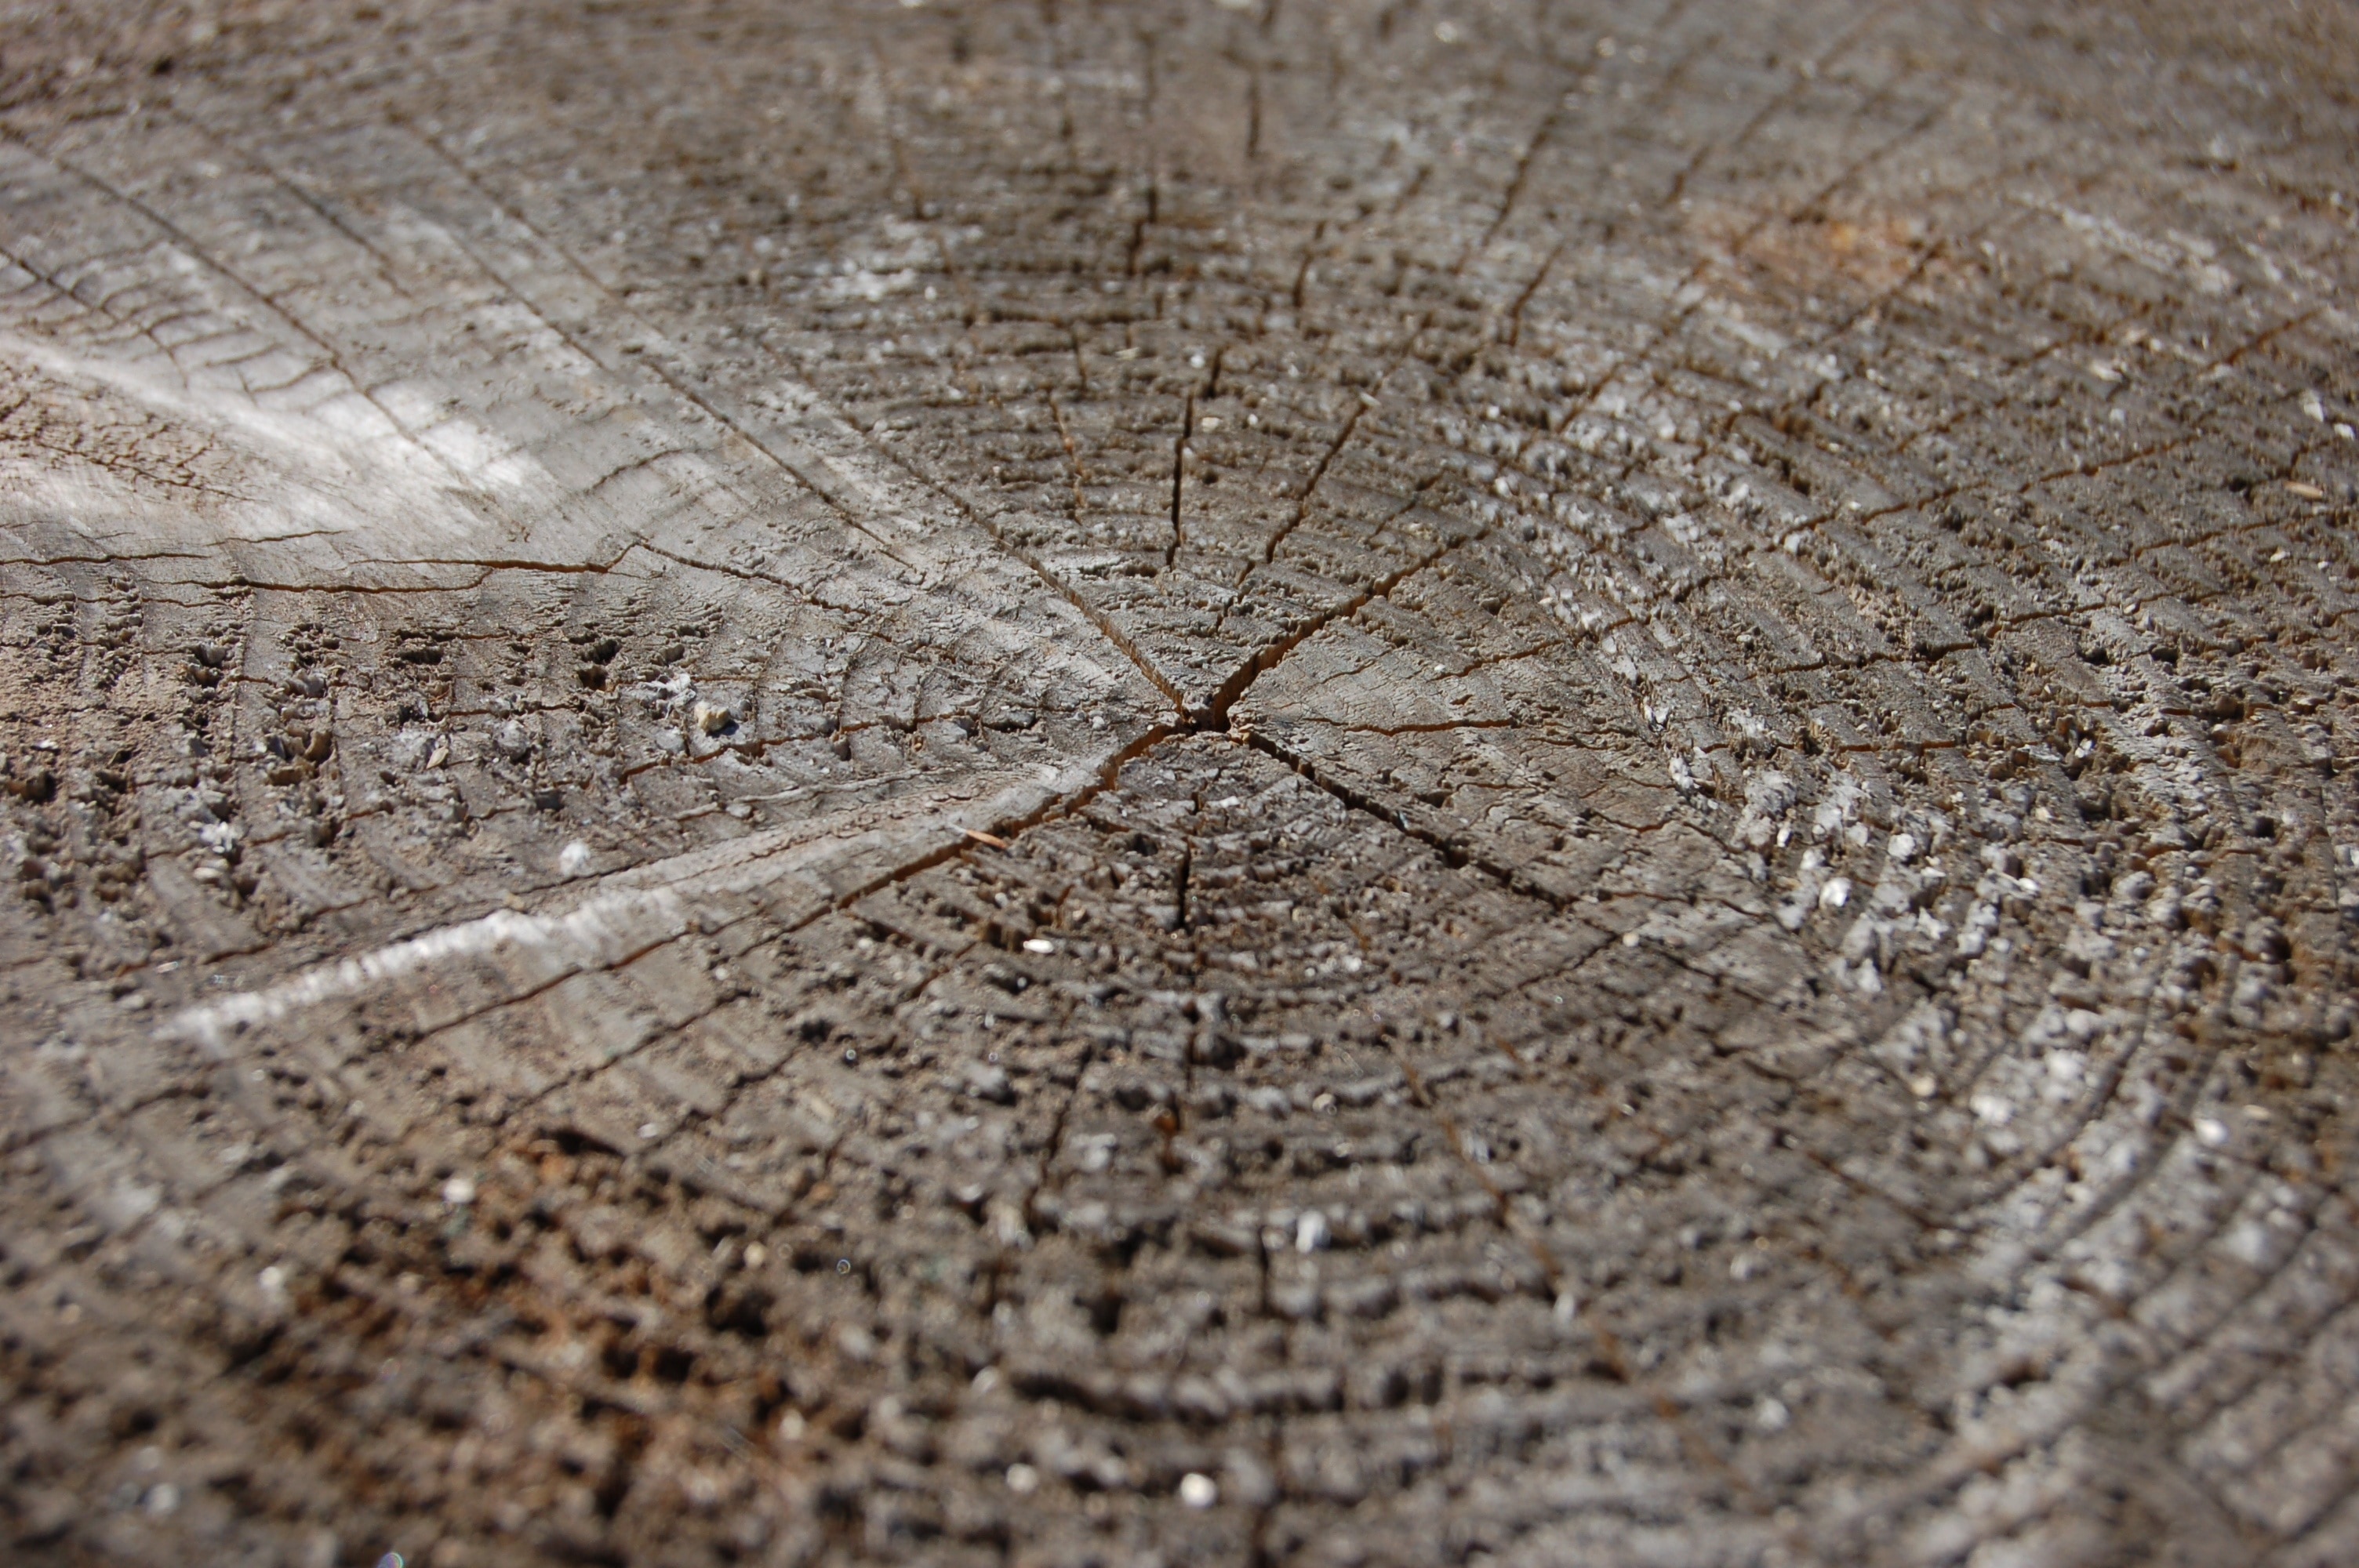 close up focus photo of a wood log base